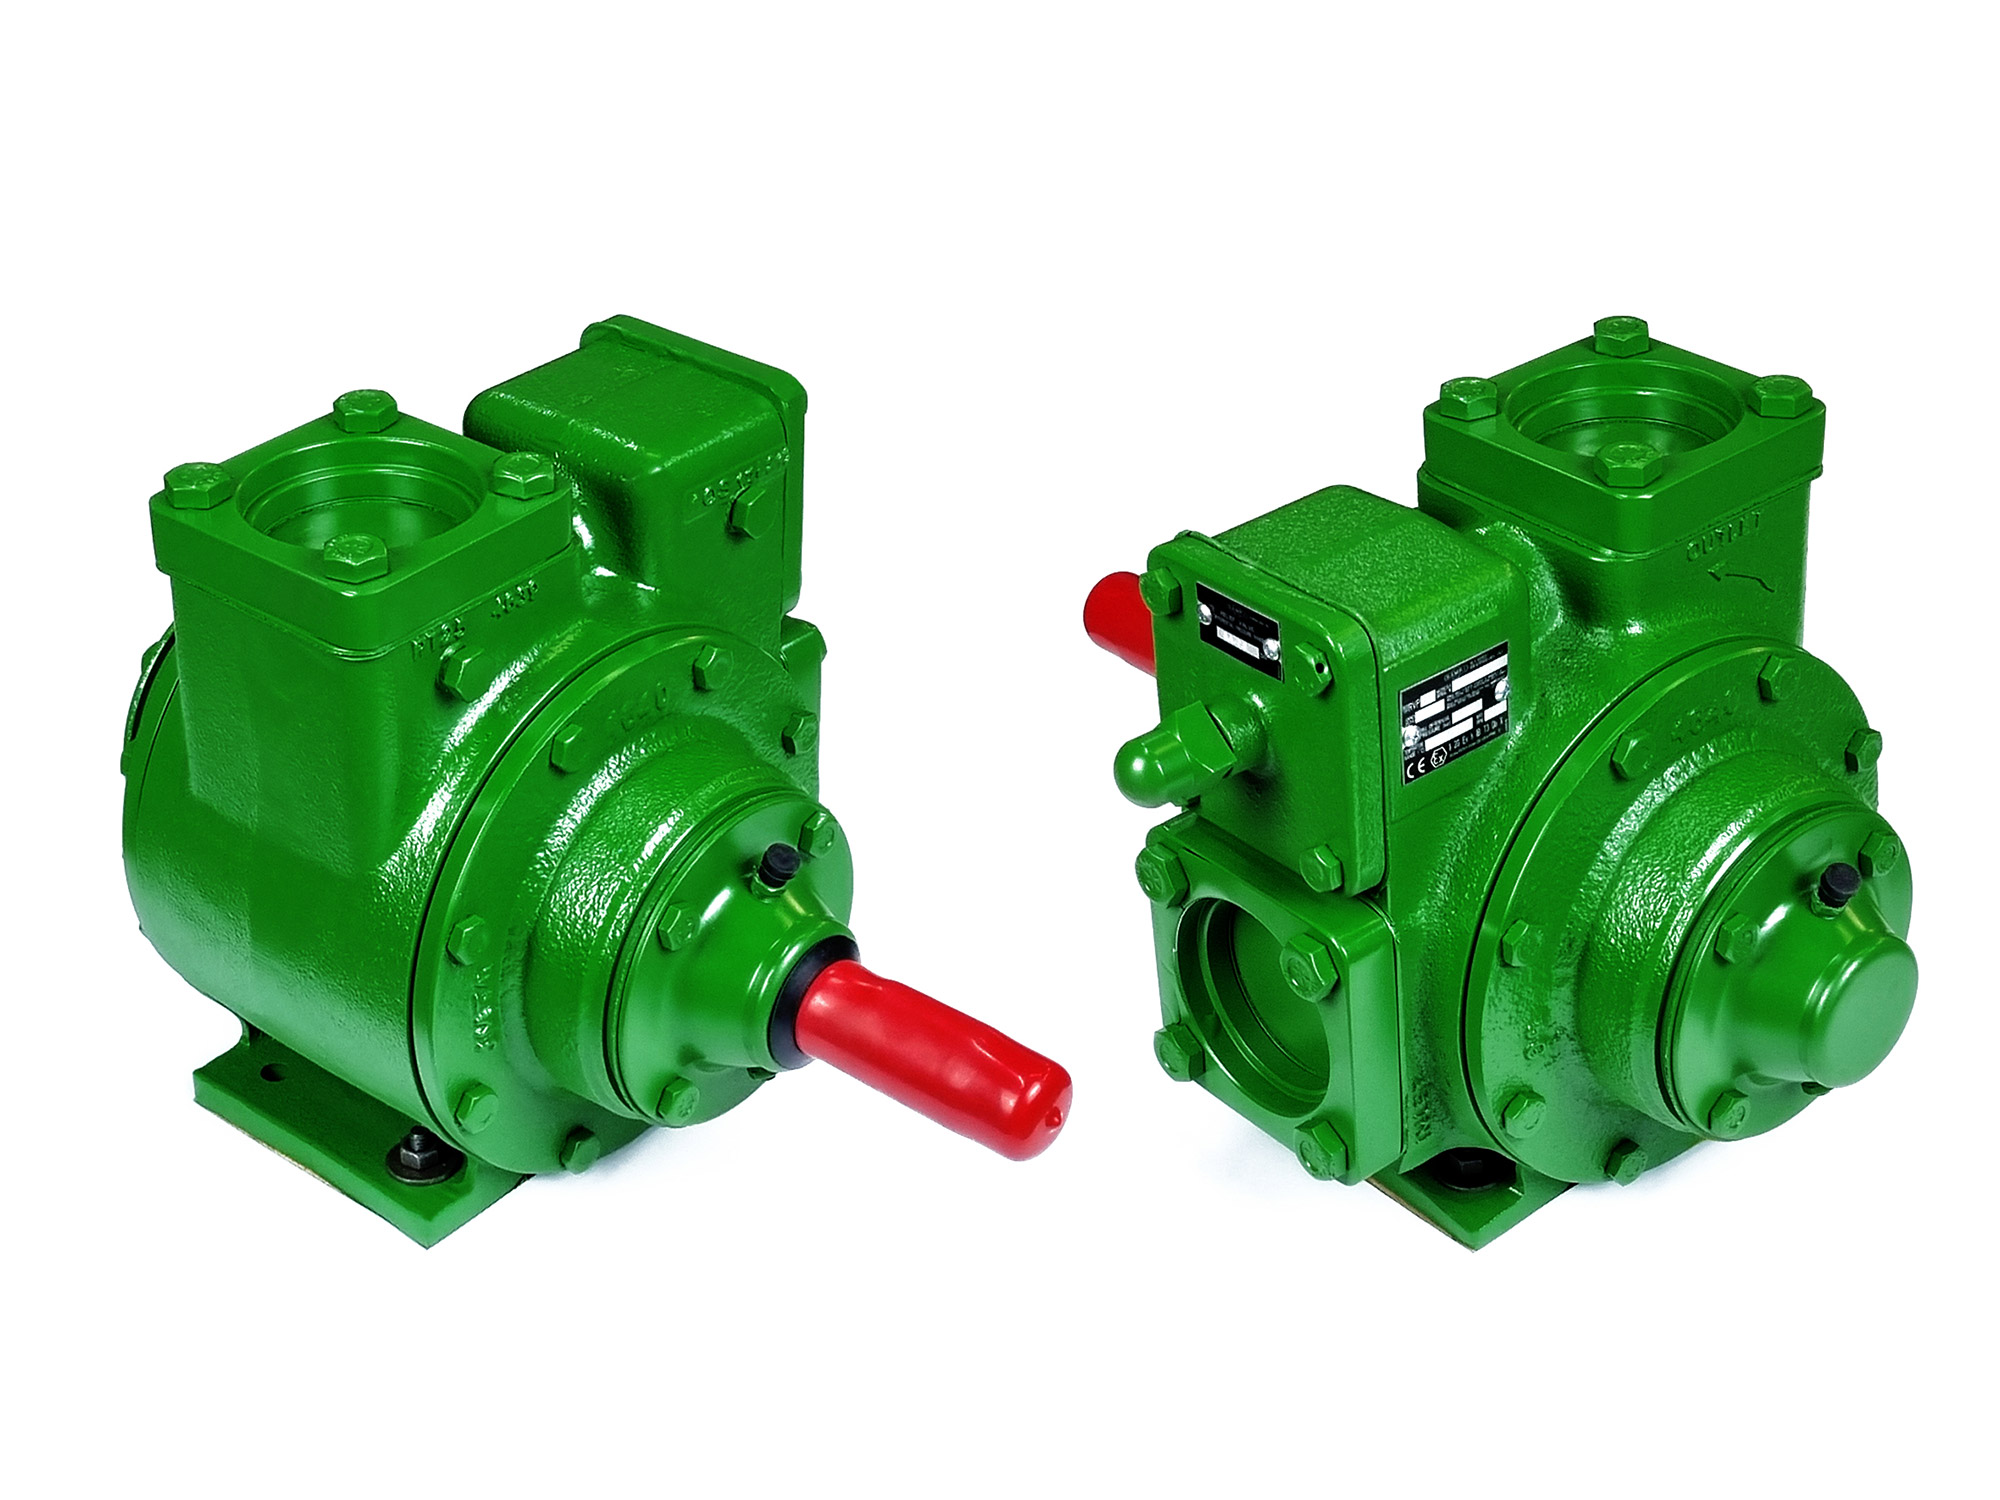 SAMPI Motor pumps and volumetric pumps